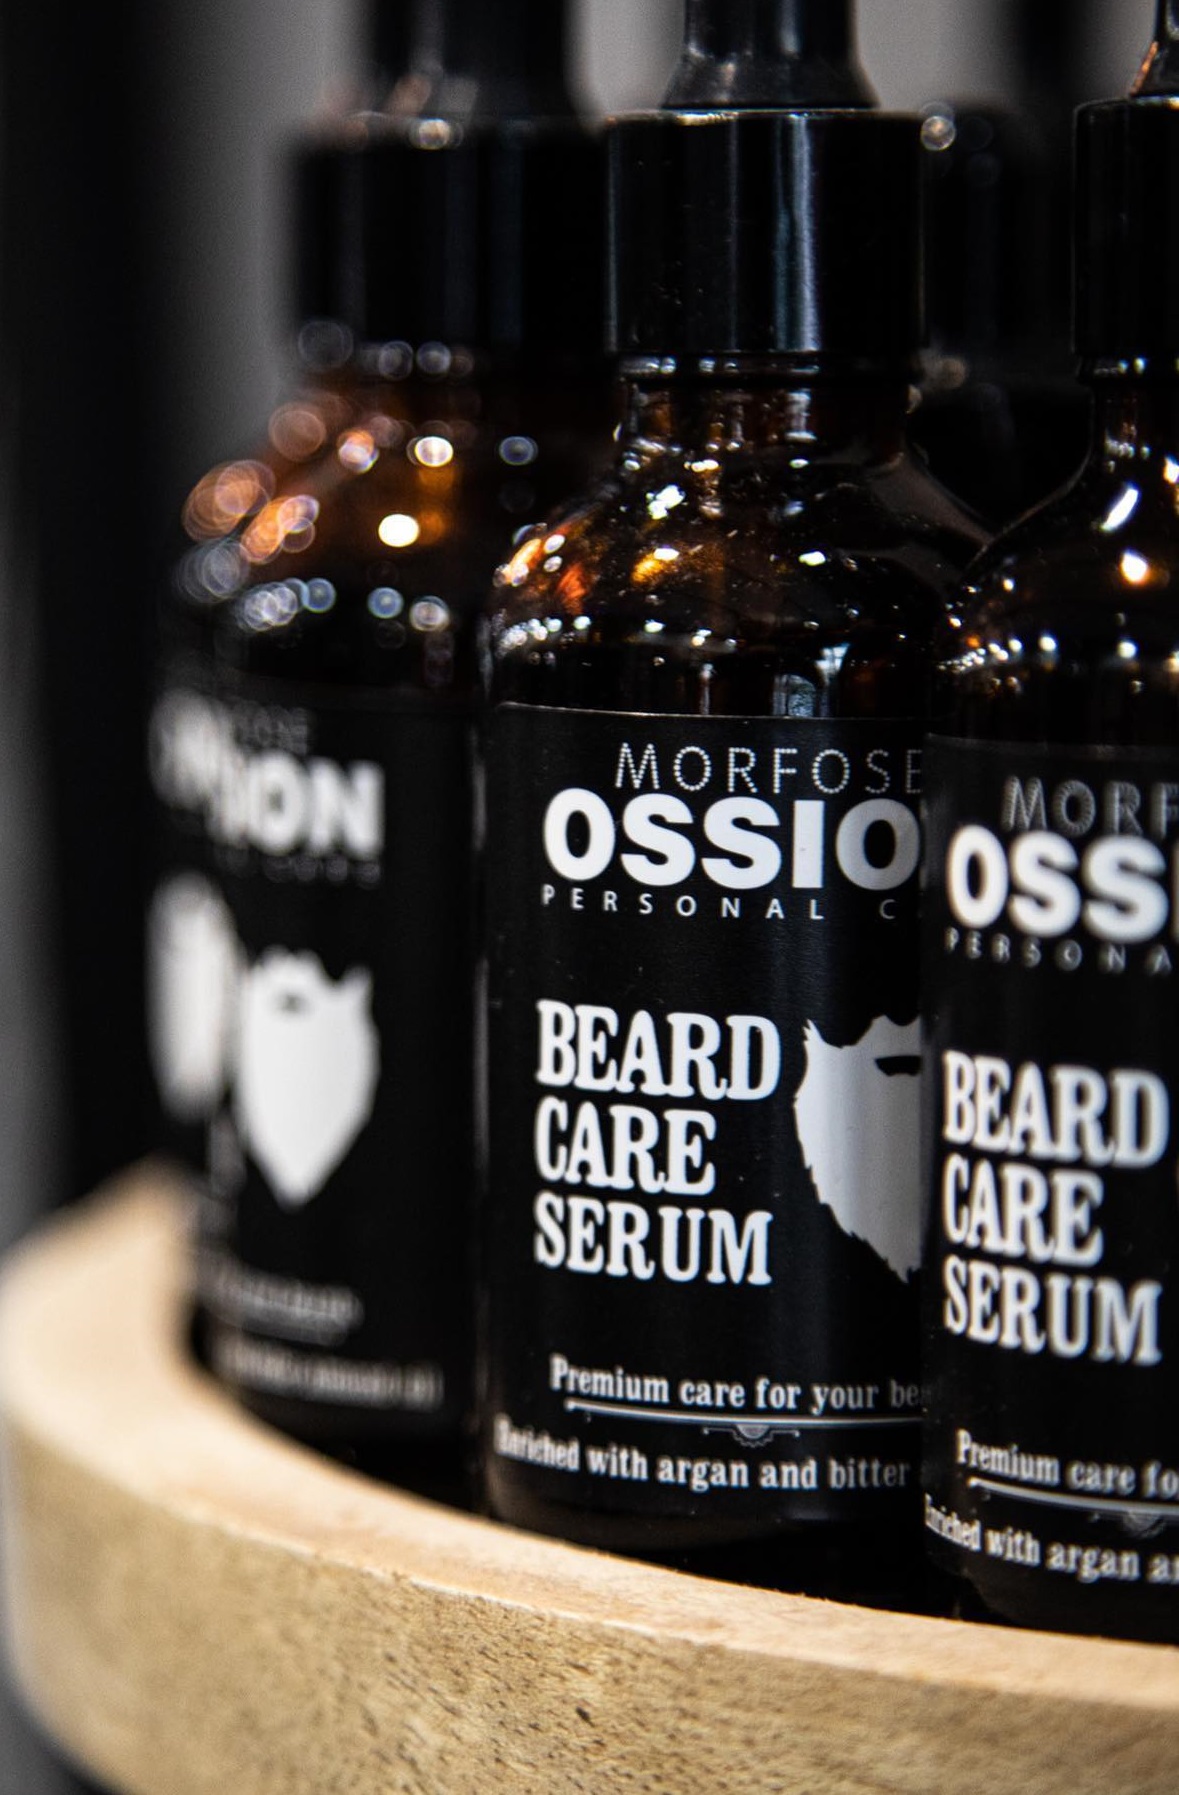 Morfose Ossion Beard Care Serum